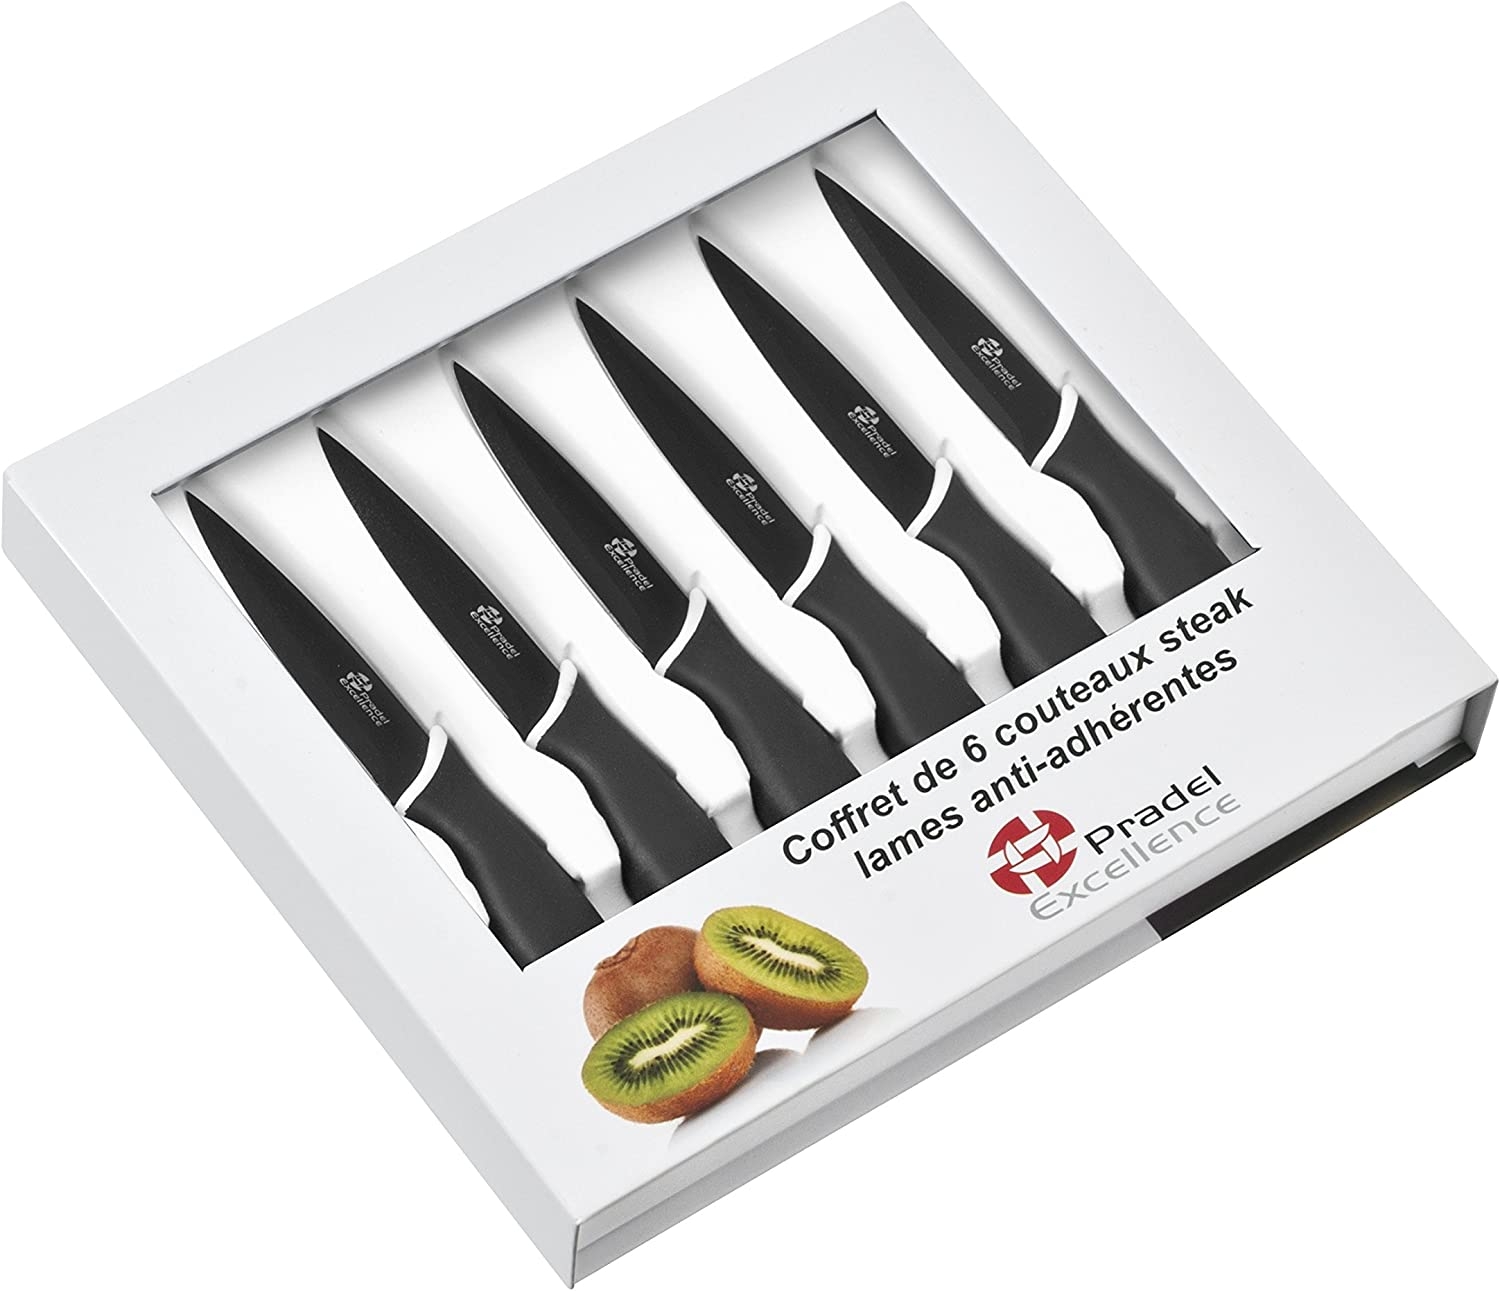 Steak knives non-stick blades black handle - Coutellerie - Pradel